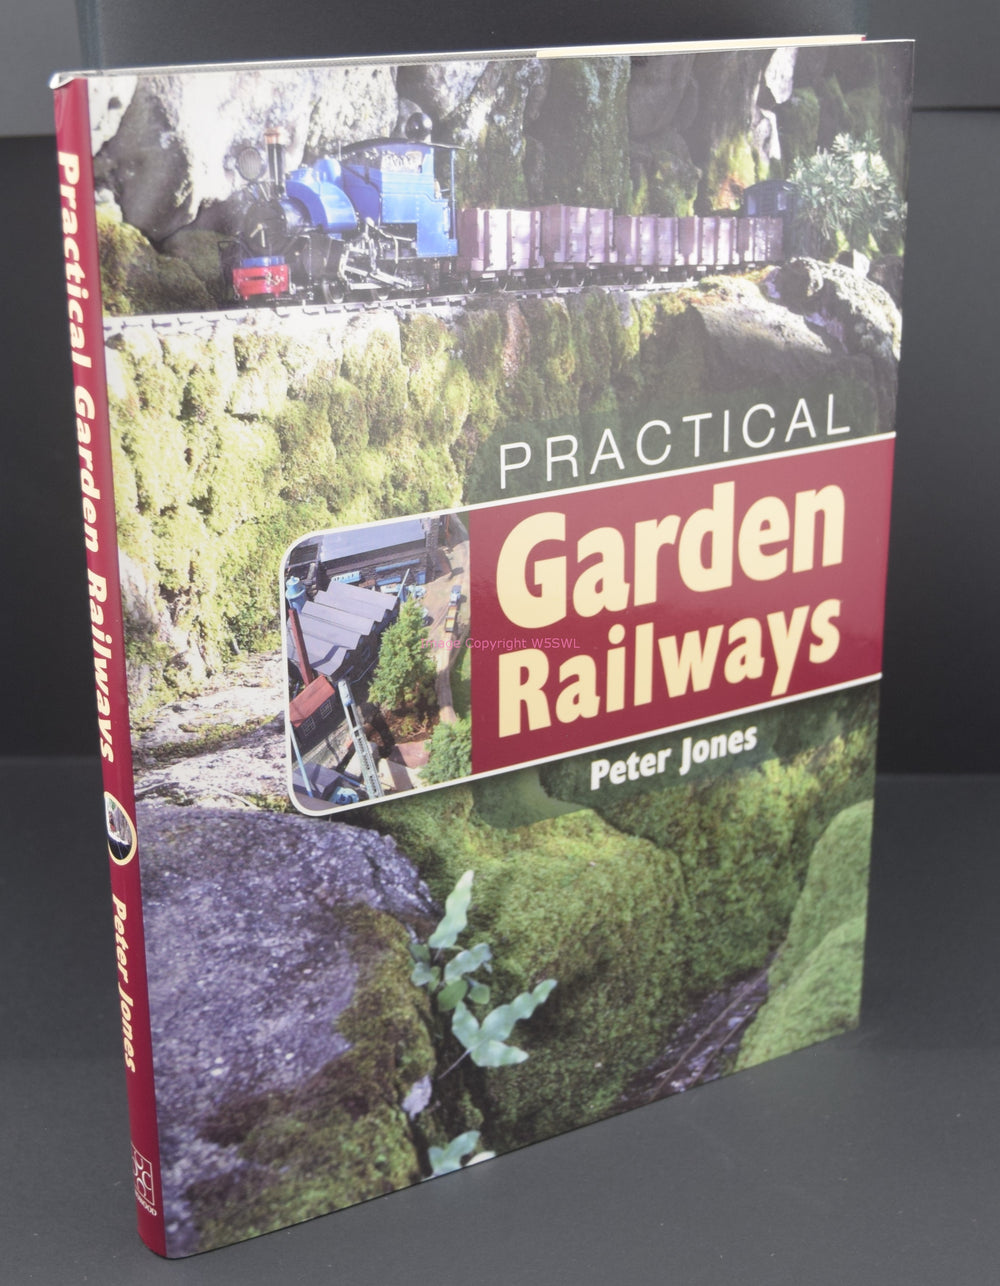 Practical Garden Railways by Peter Jones - Dave's Hobby Shop by W5SWL